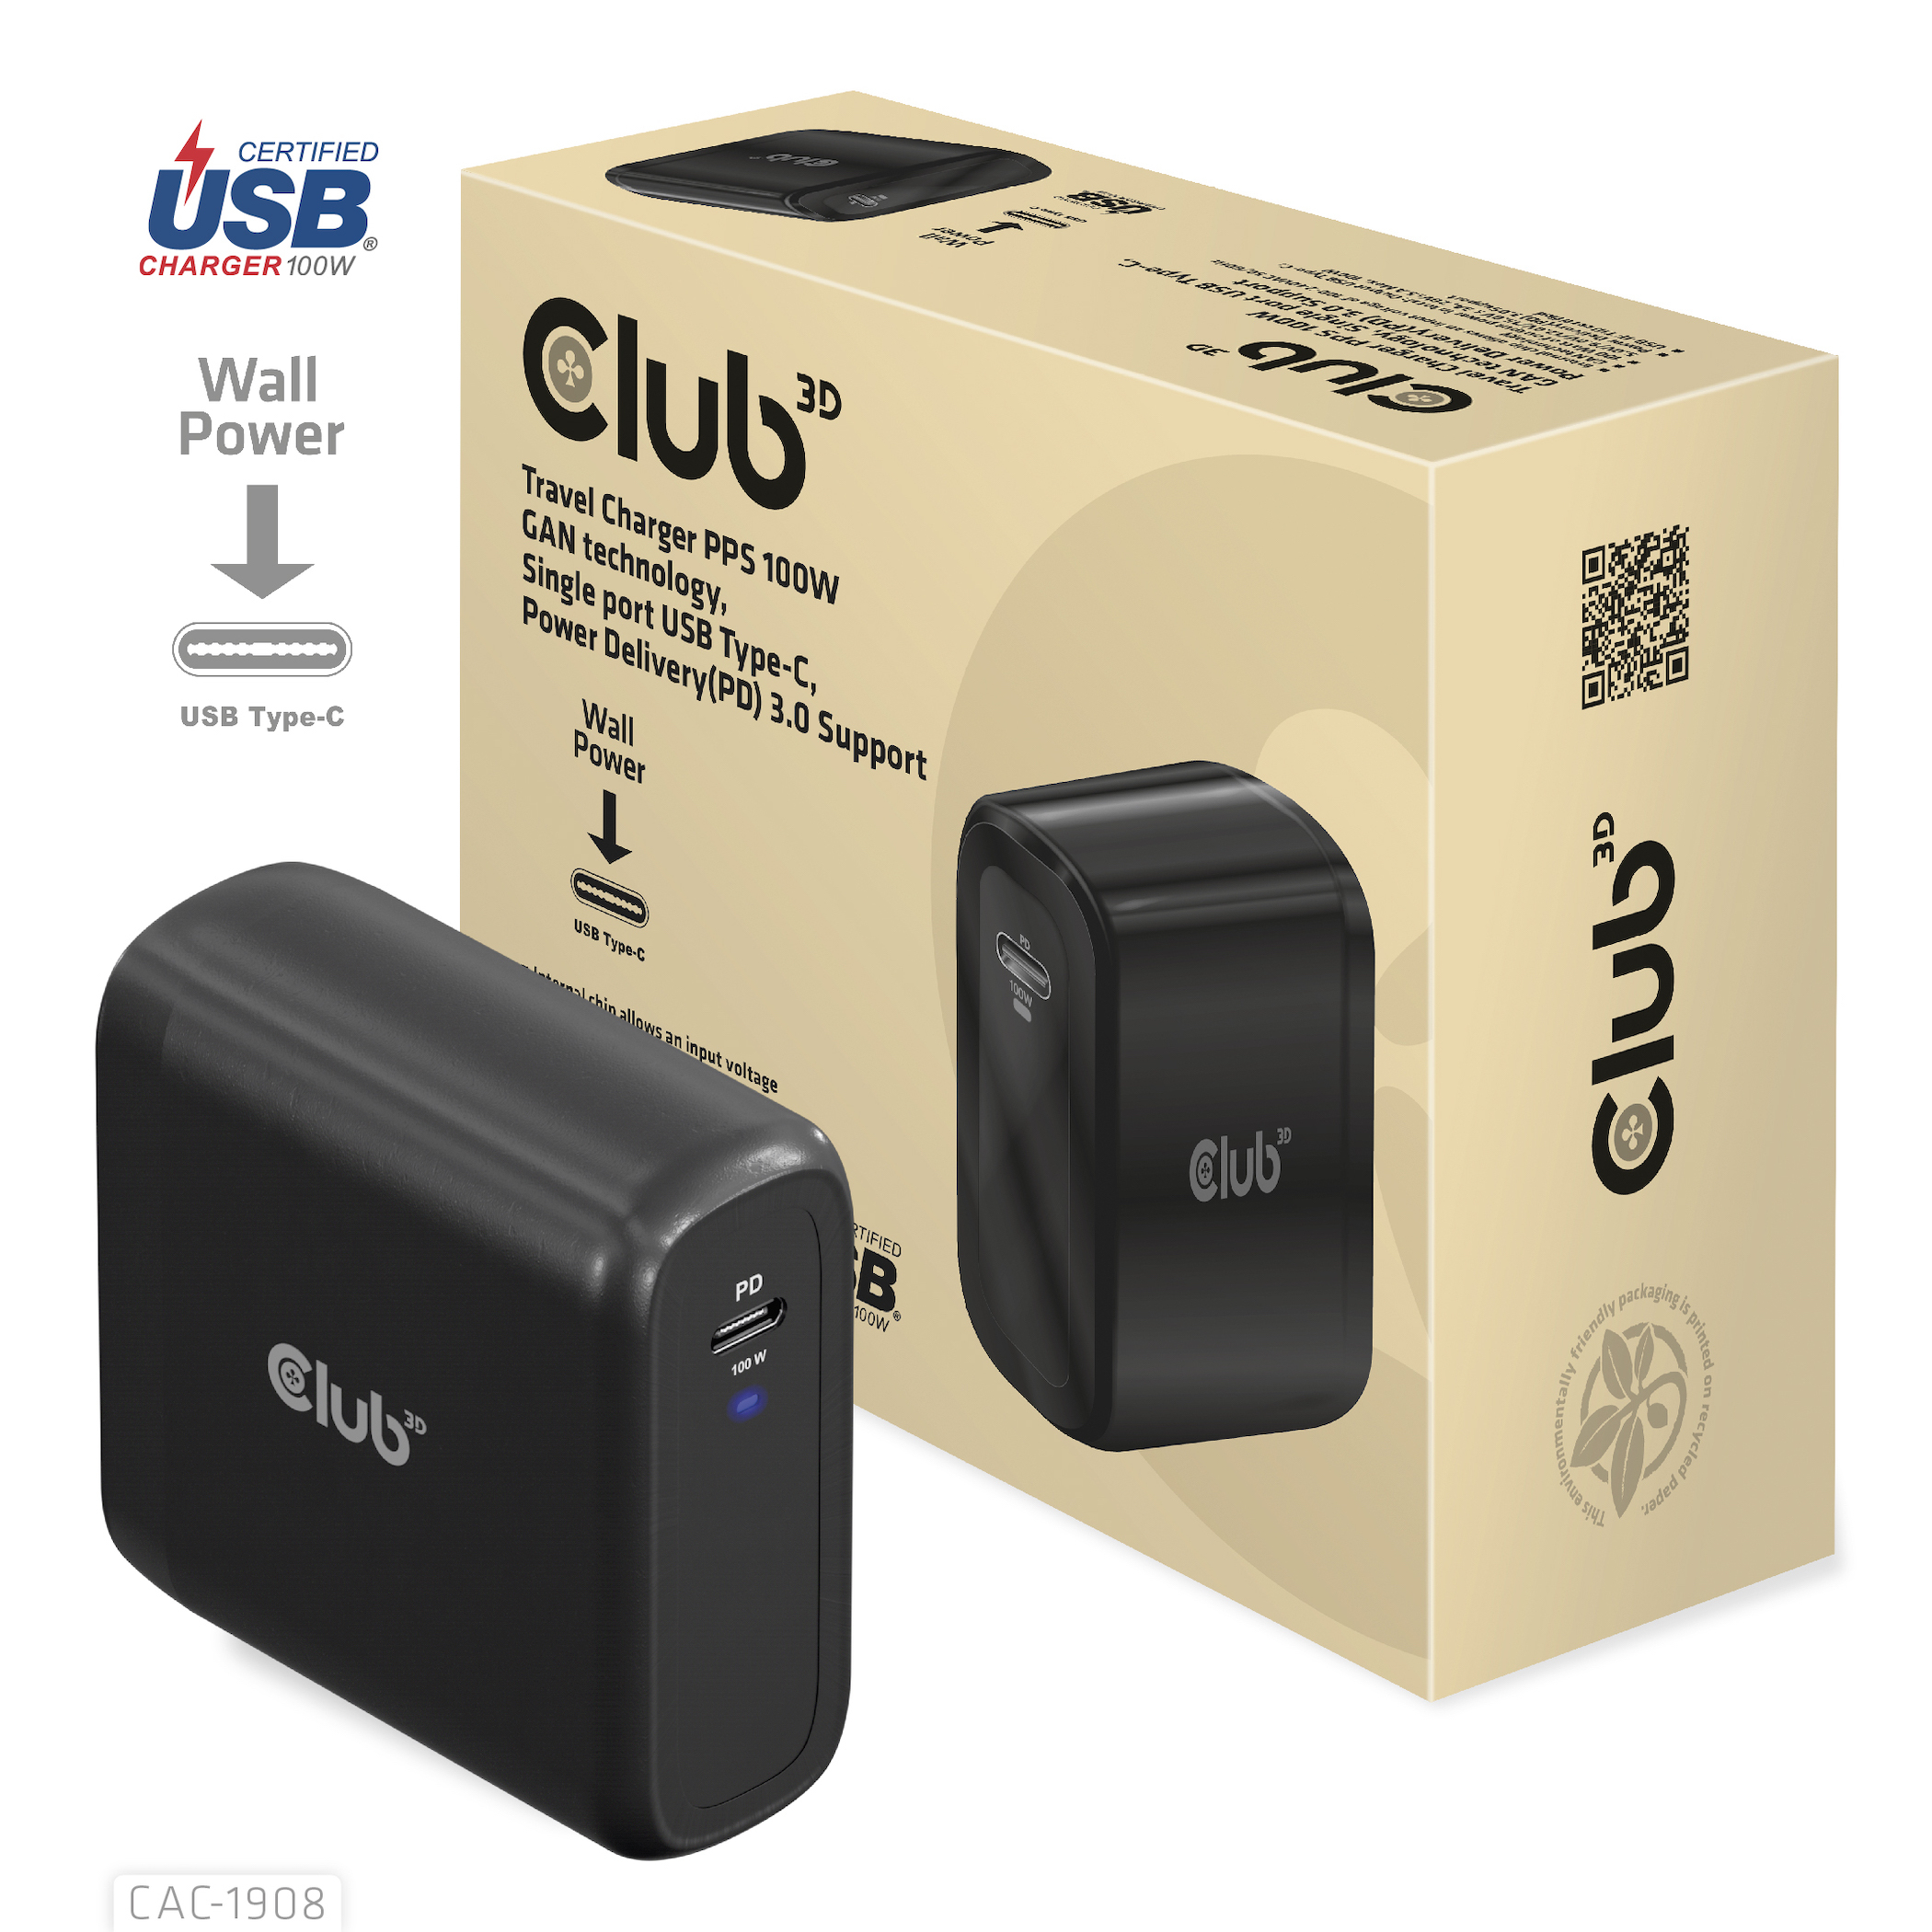 Club 3D Reise Ladegerät PPS 100W GAN, USB-IF TID-zertifiziert USB Typ-C PD 3.0